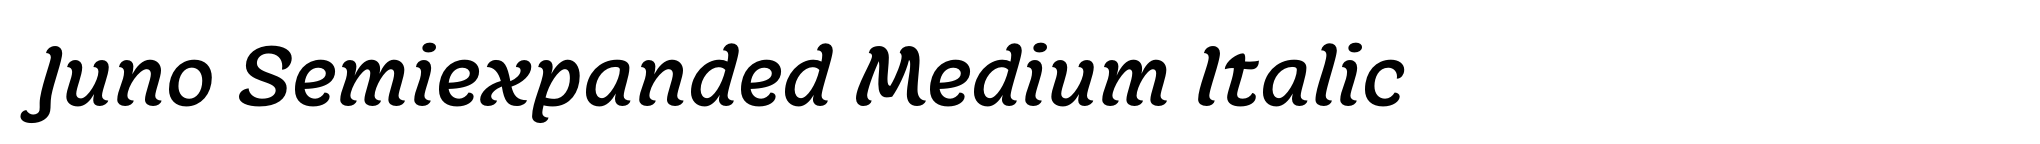 Juno Semiexpanded Medium Italic image